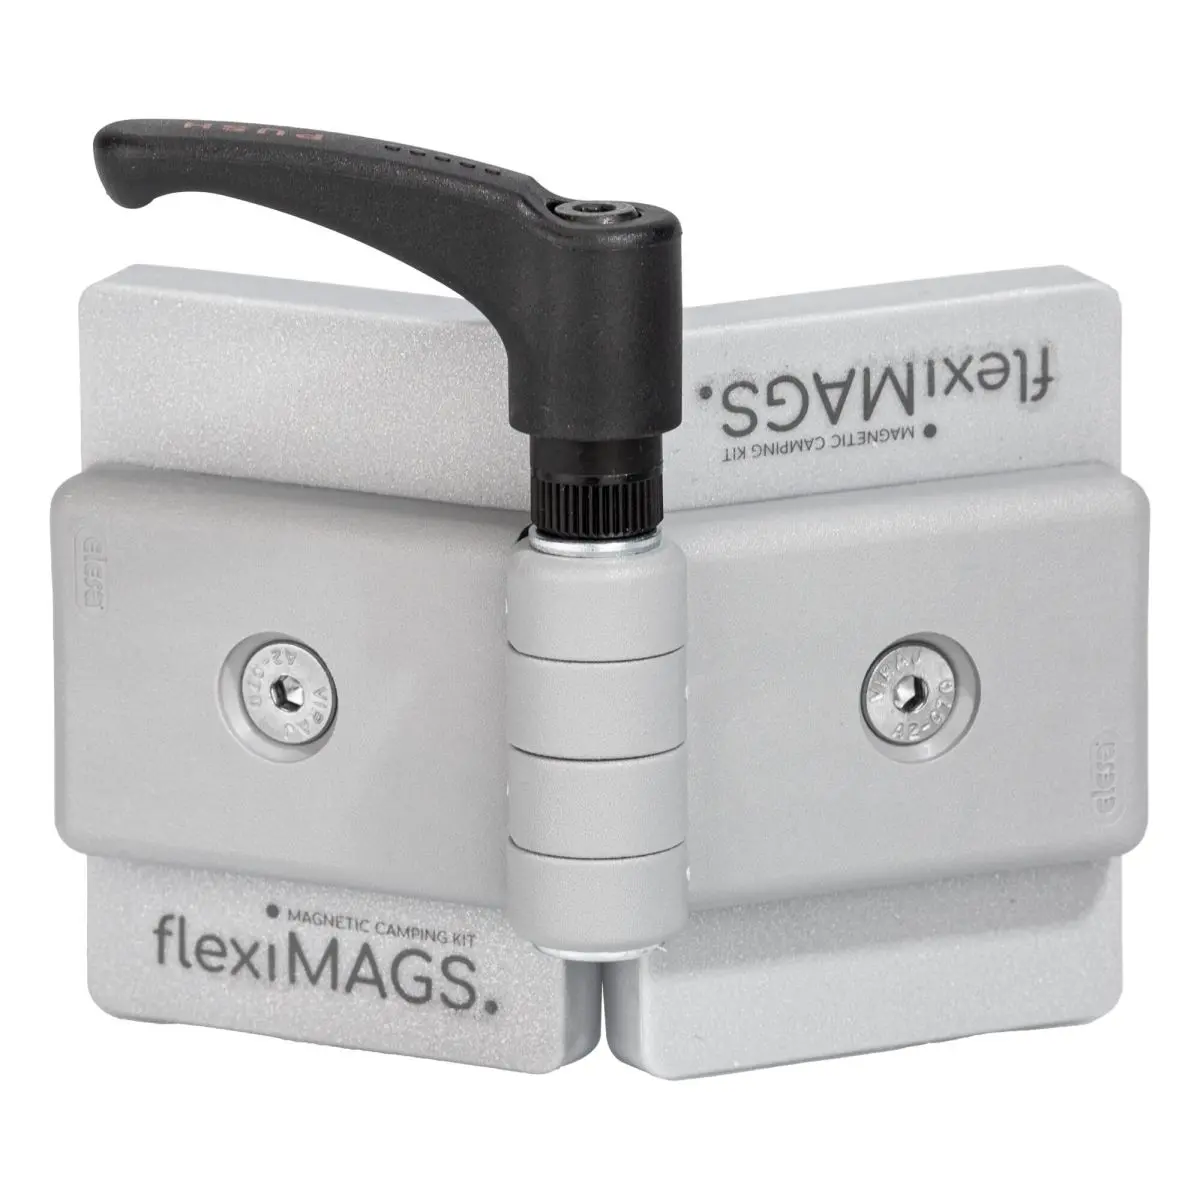 Scharniermagnet flexiMAGS - flexiMAG-115x70 plus